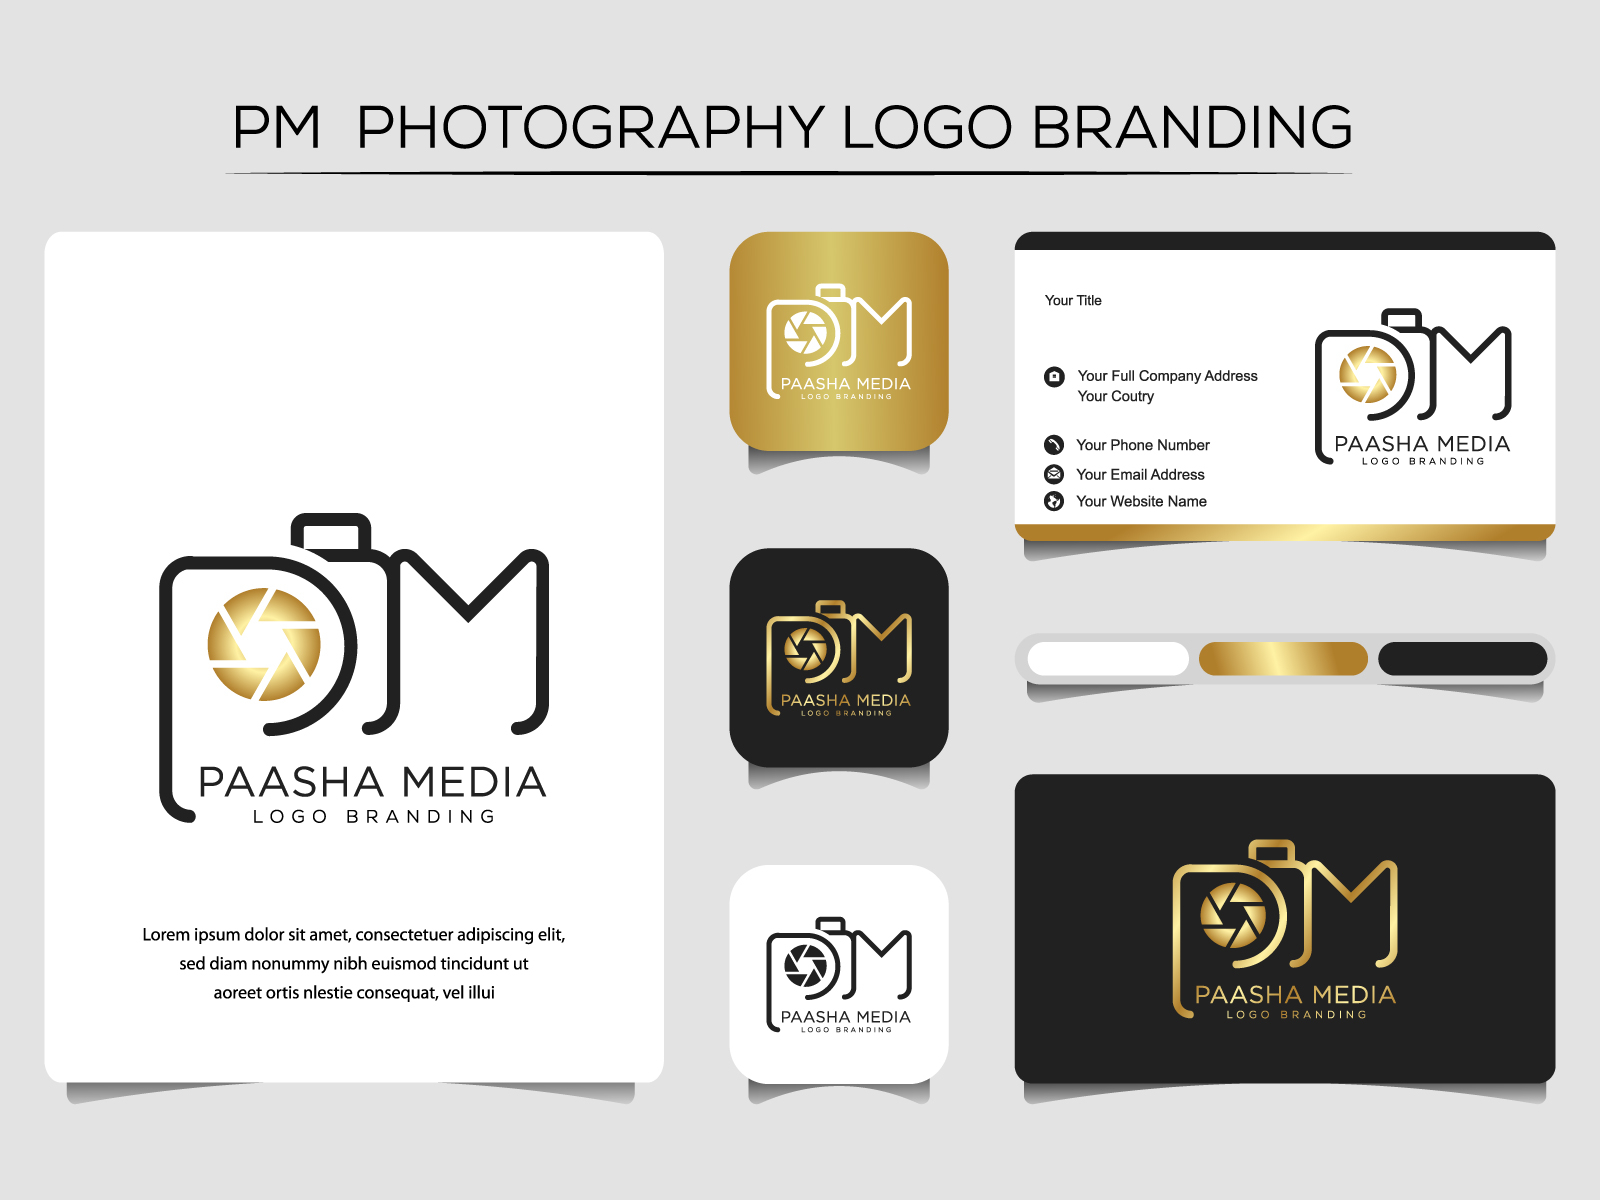 Letter PM Monogram Logo Icon Design Vector. Stock Vector - Illustration of  design, business: 191033880